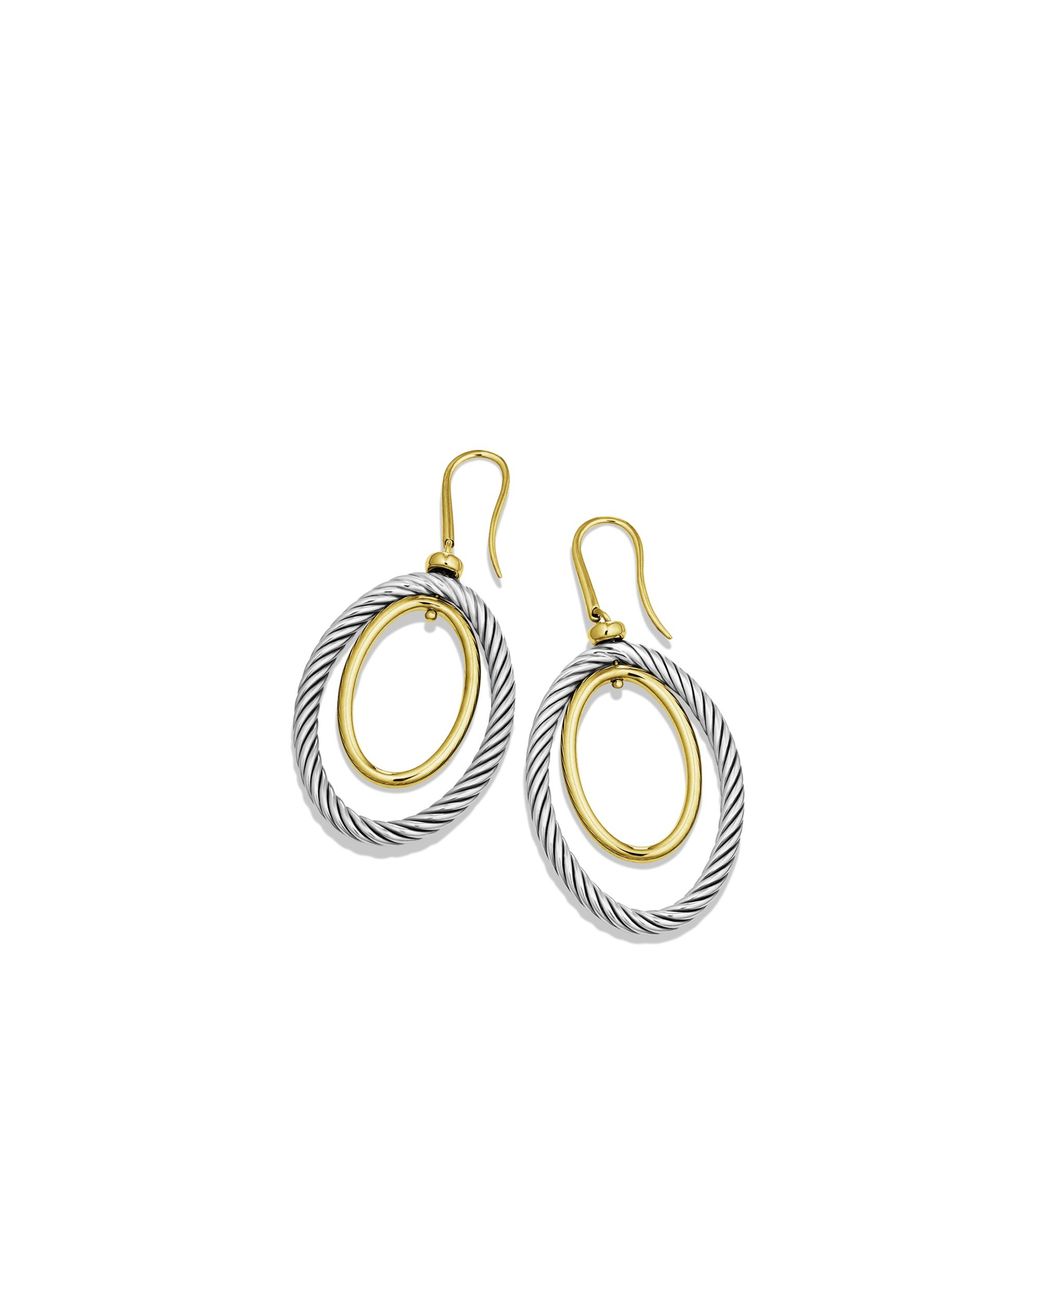 Share more than 65 david yurman earrings best - esthdonghoadian